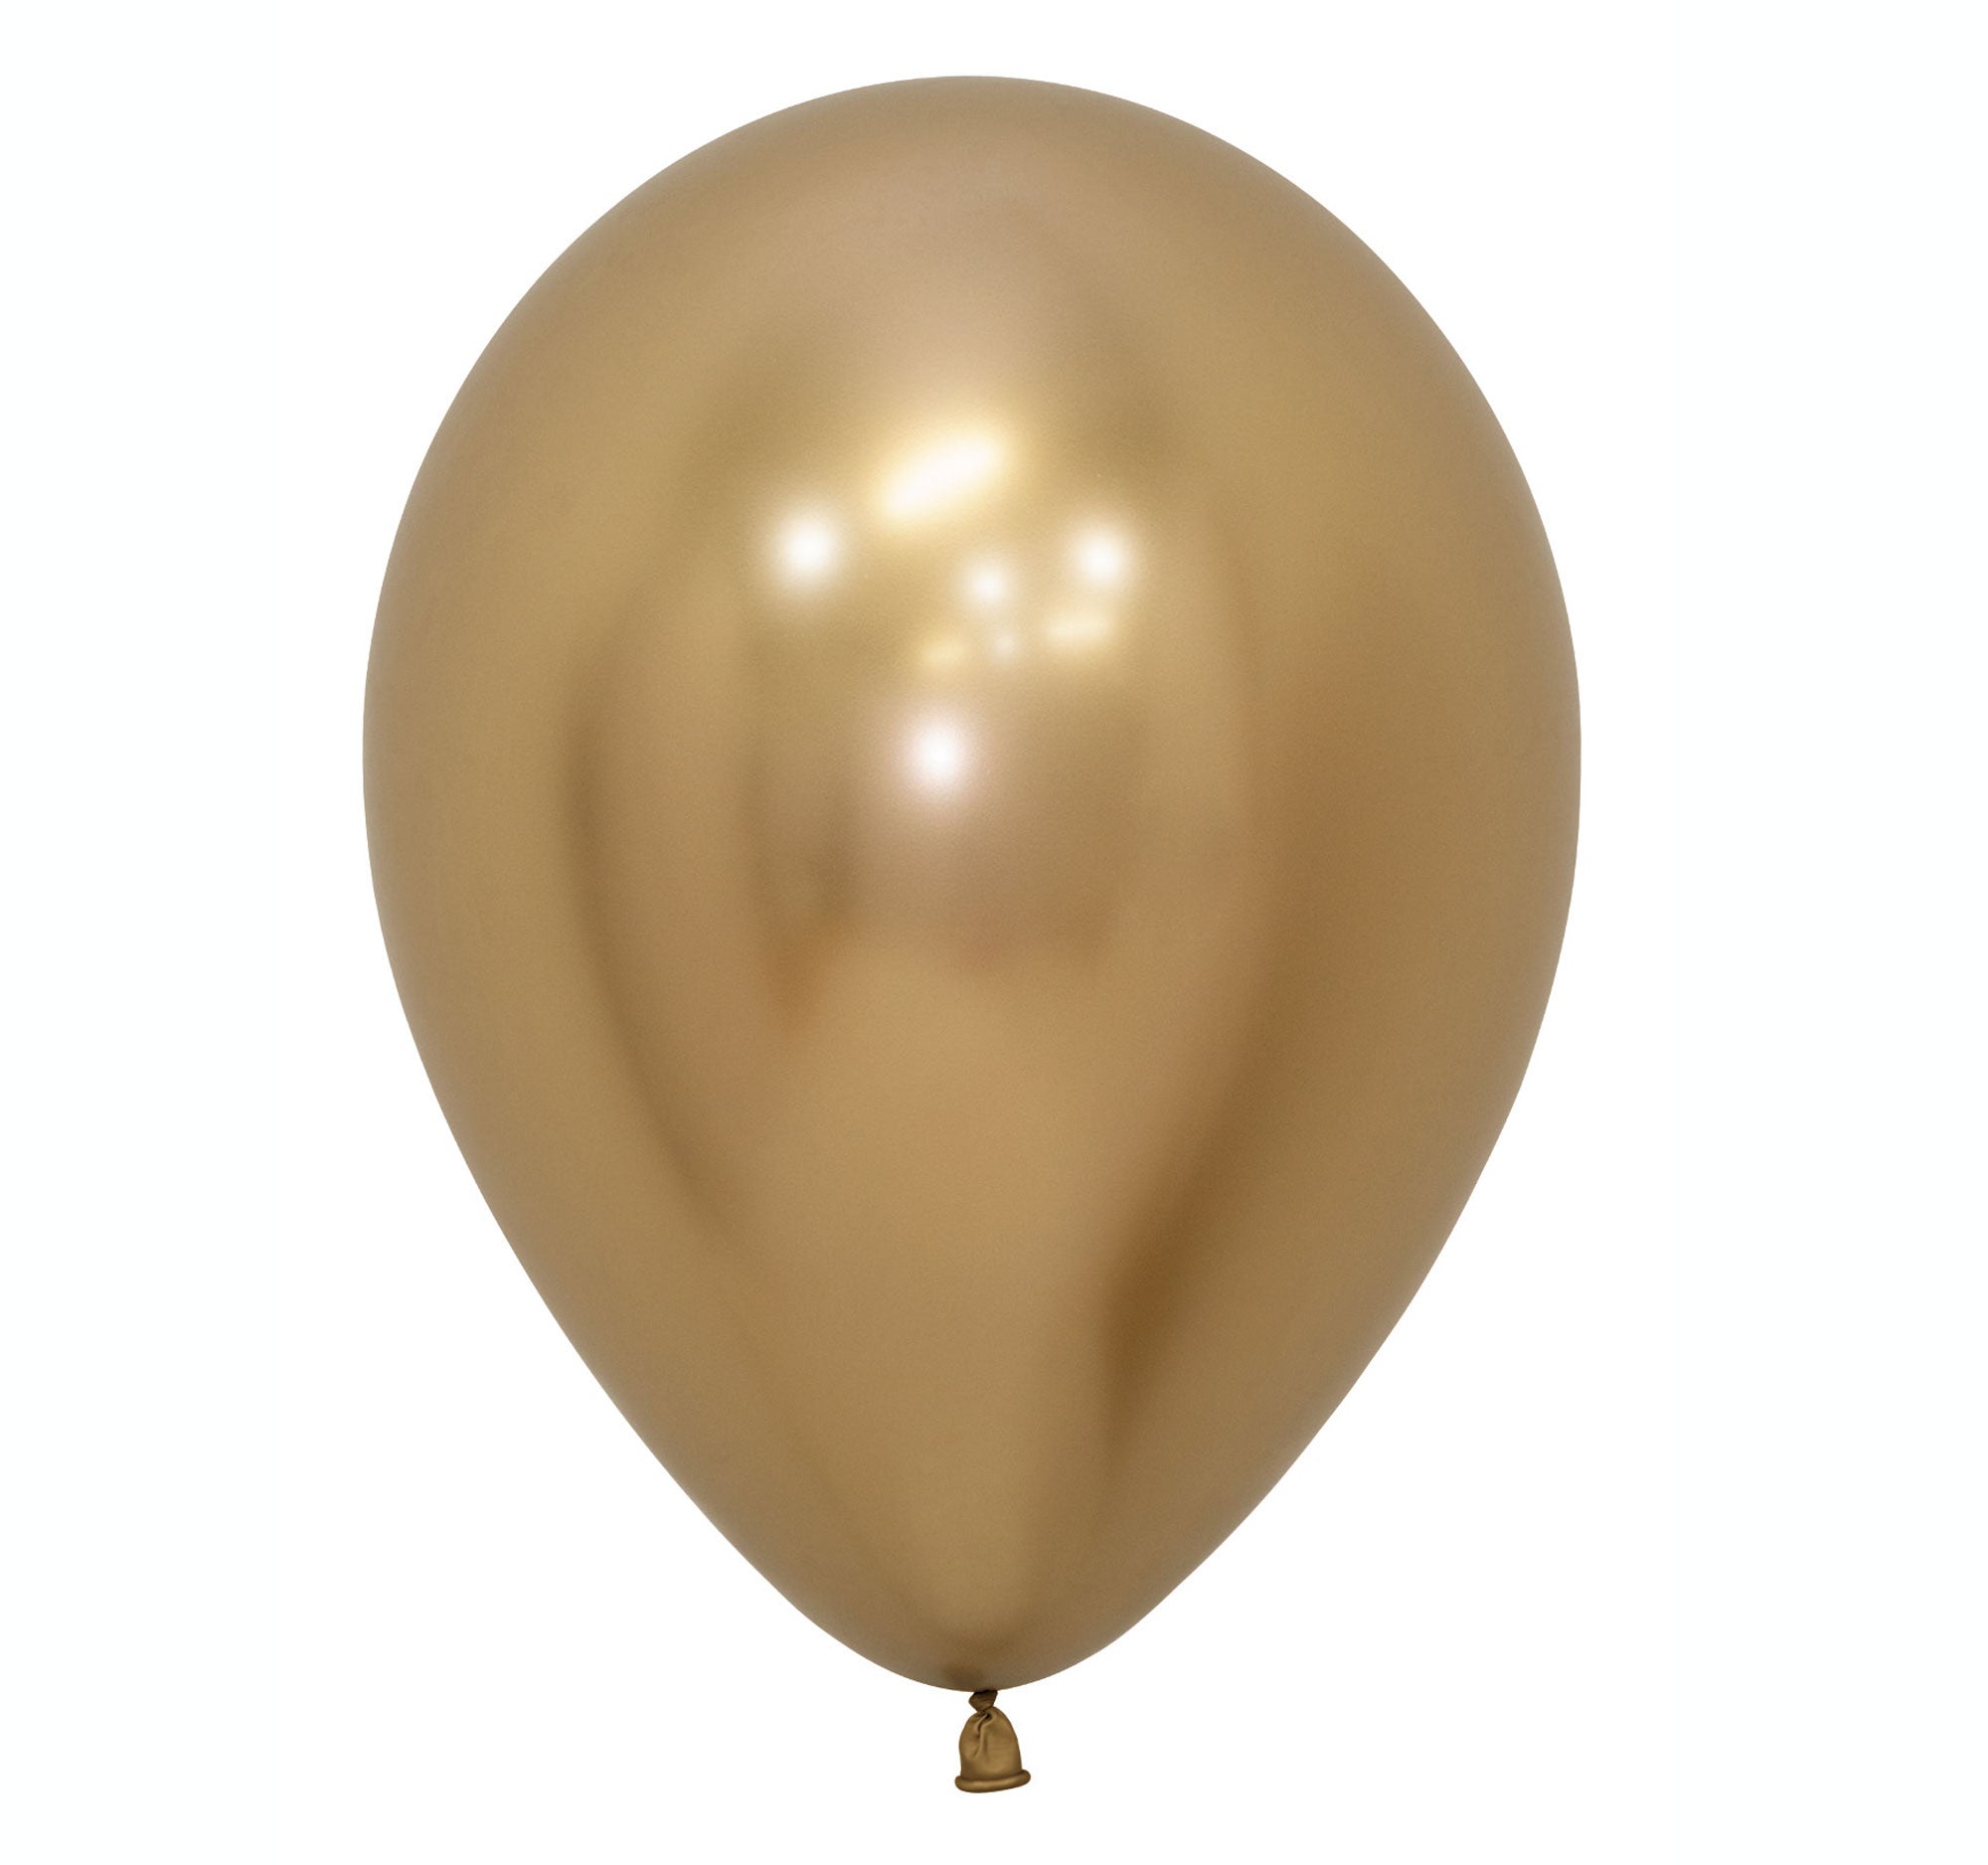 Sempertex 30cm Metallic Reflex Fuchsia Latex Balloons 912, 50PK